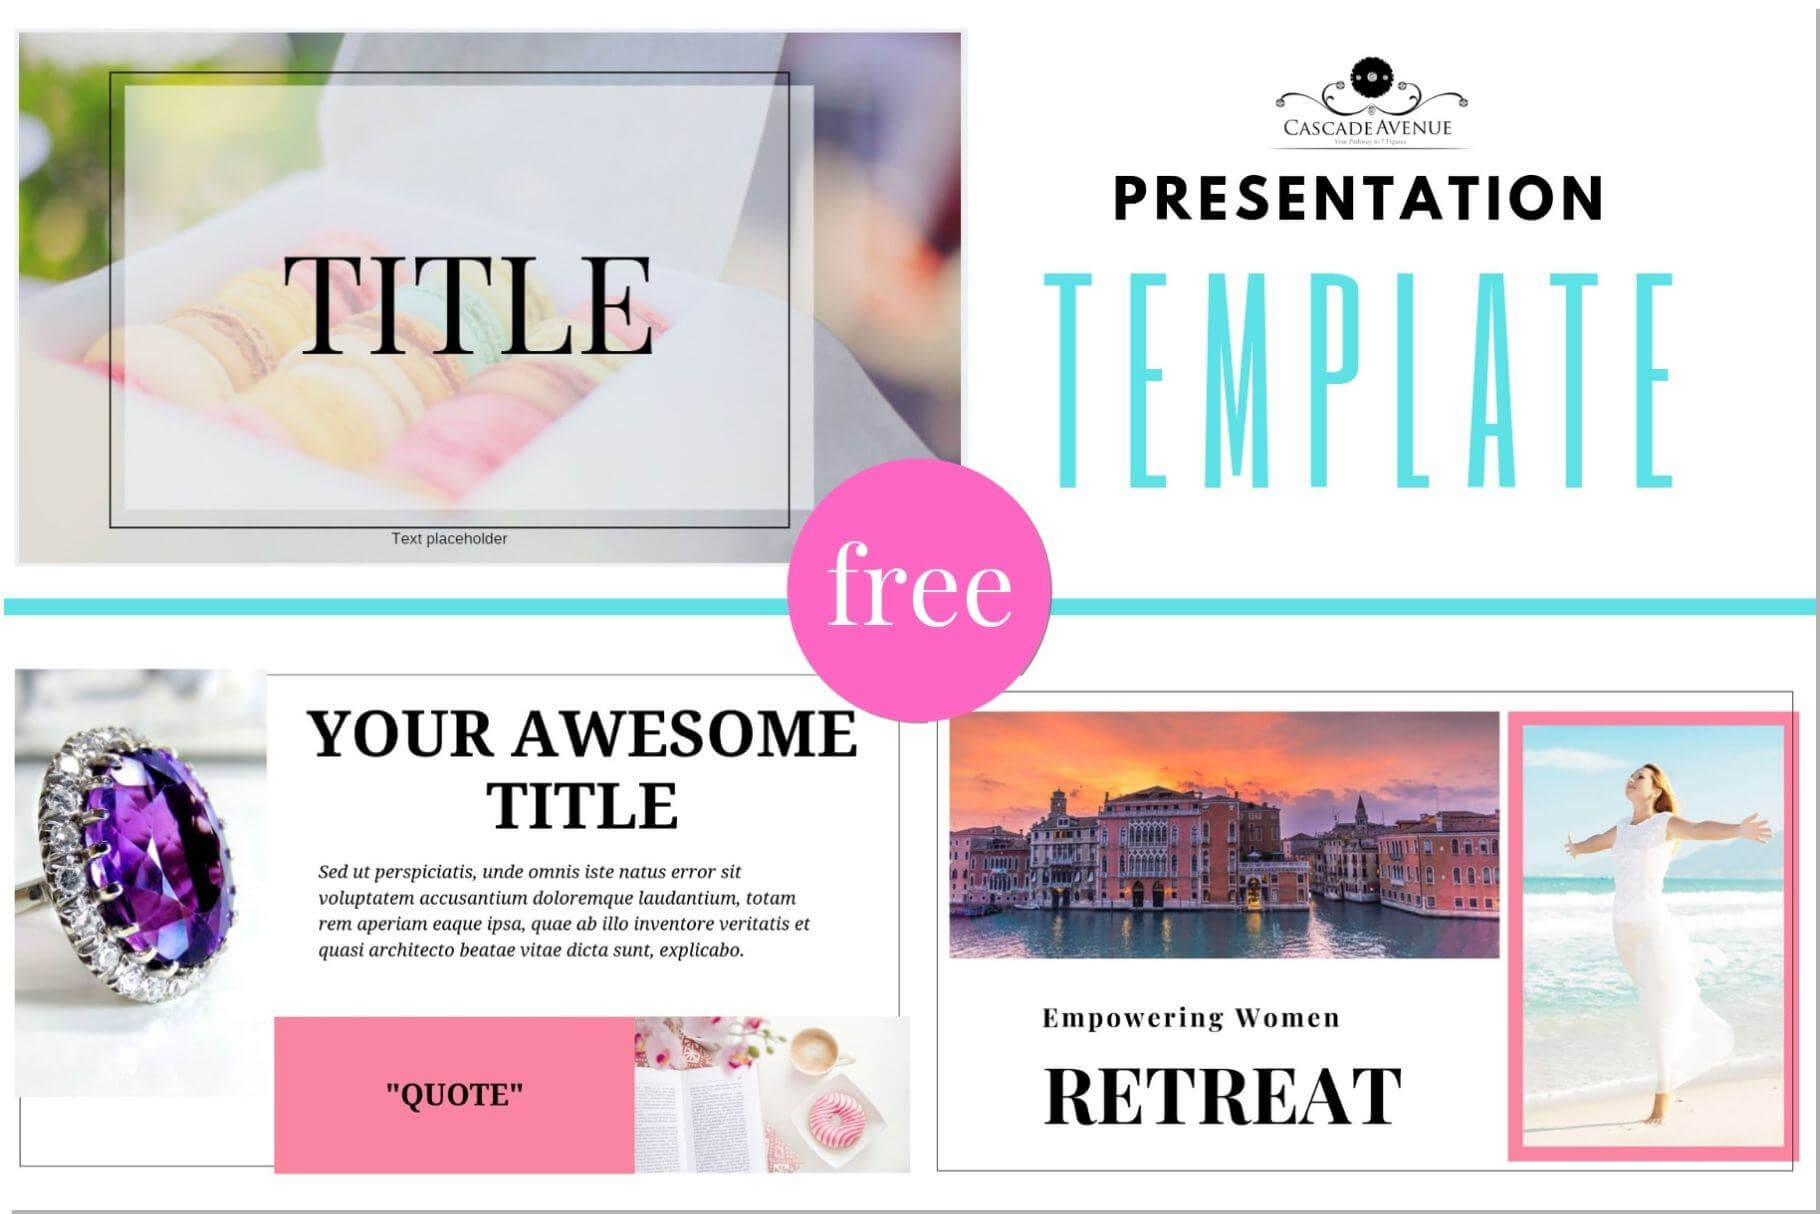 free-canva-presentation-template-modern-cascade-avenue-regarding-webinar-powerpoint-templates